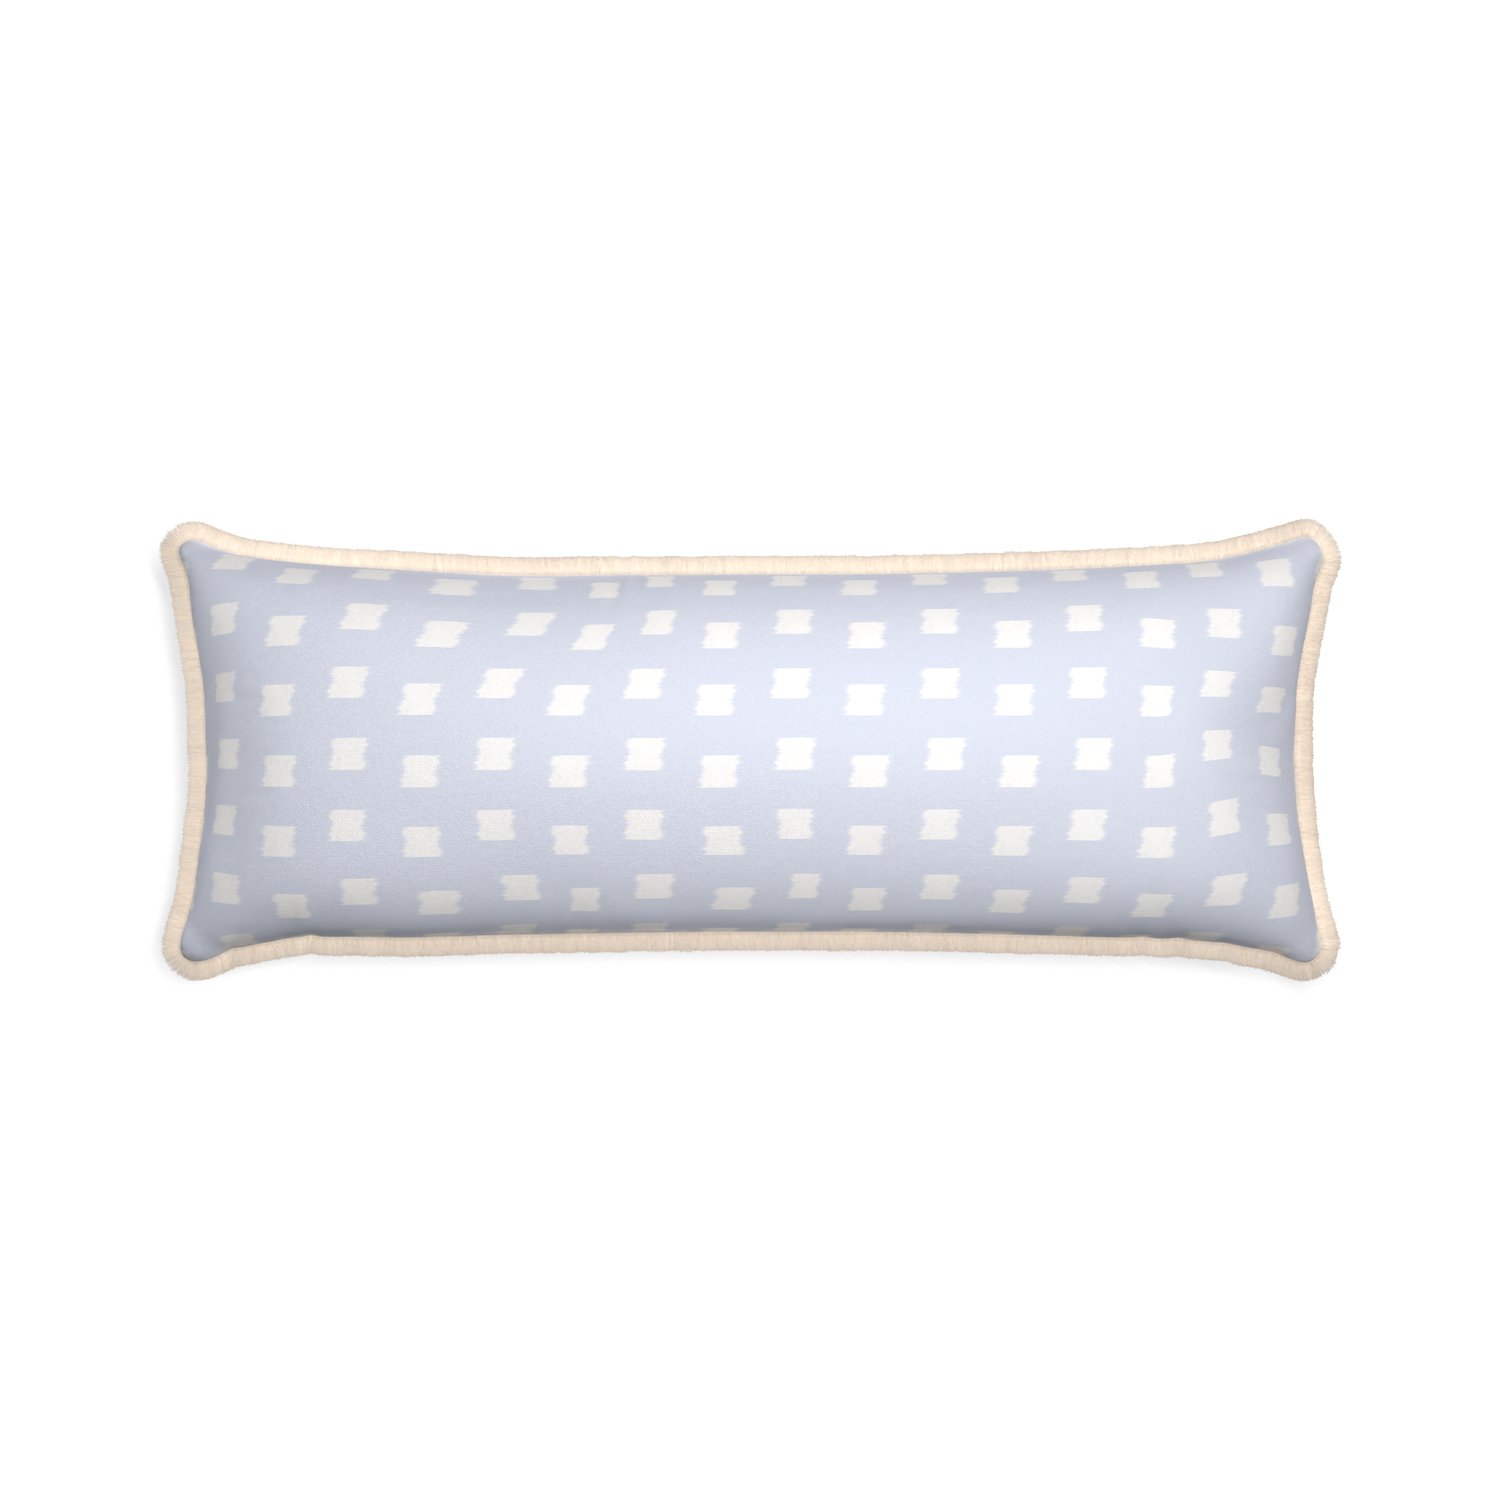 Xl-lumbar denton custom sky blue patternpillow with cream fringe on white background